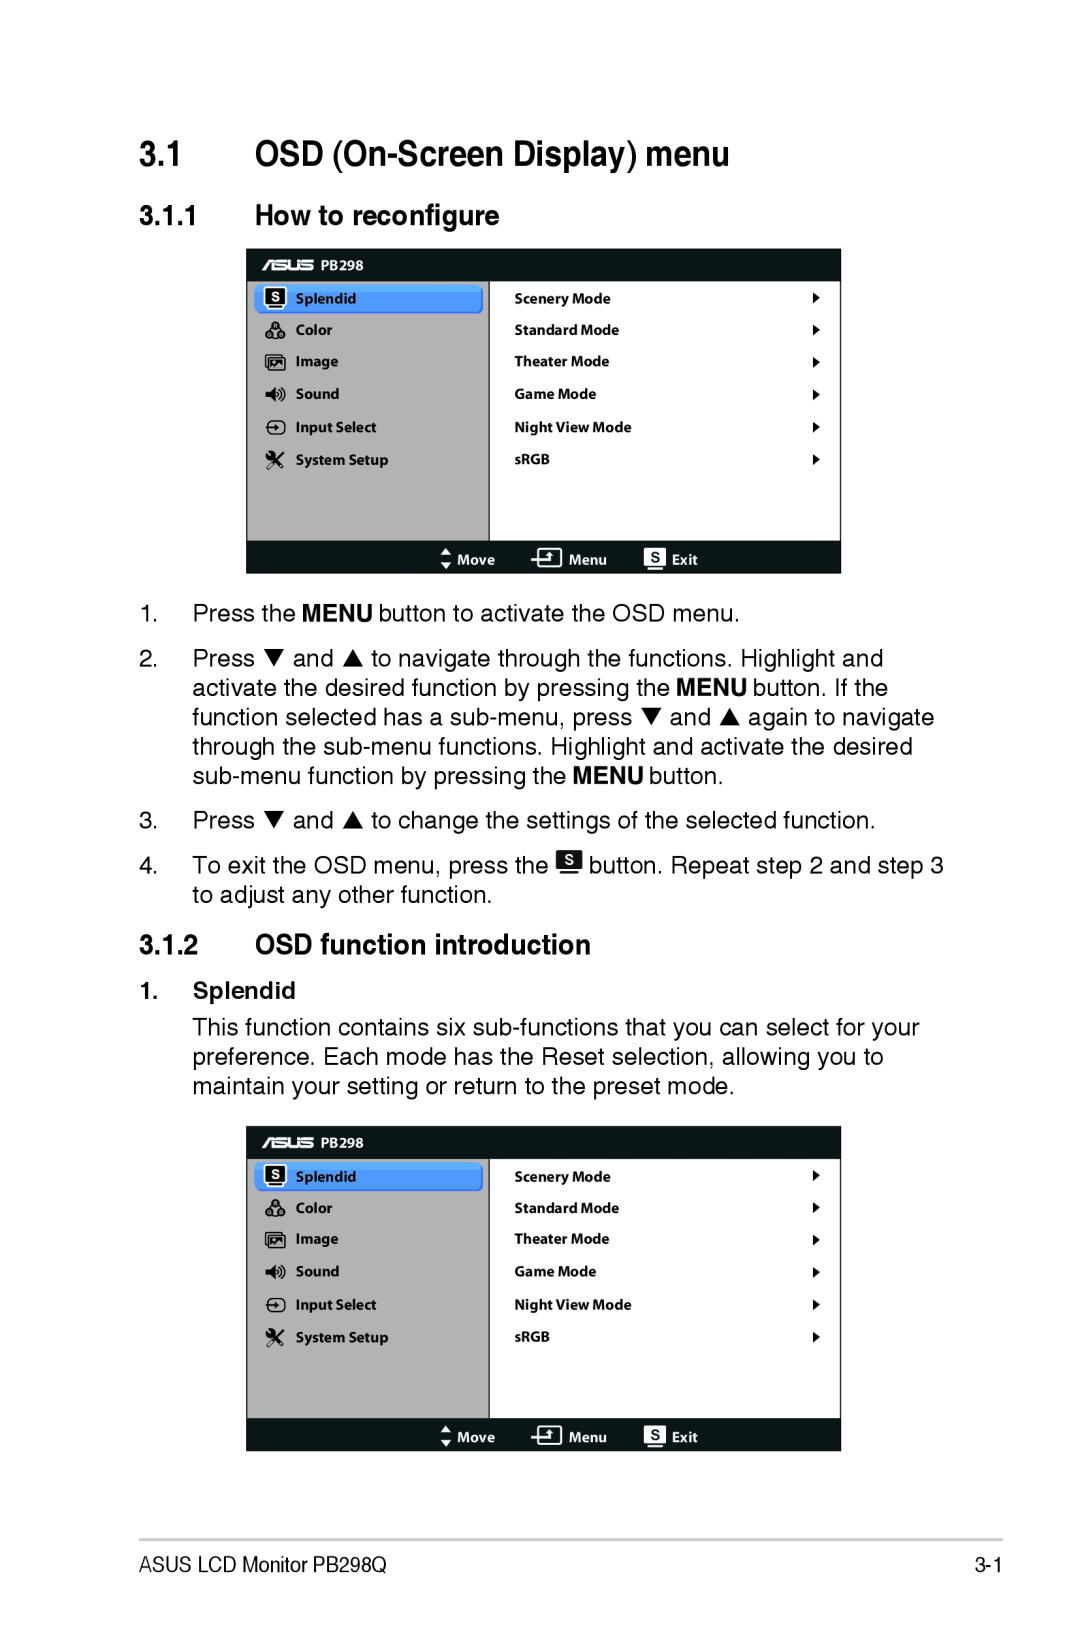 Asus PB298Q manual OSD On-Screen Display menu, How to reconfigure, OSD function introduction, Splendid 